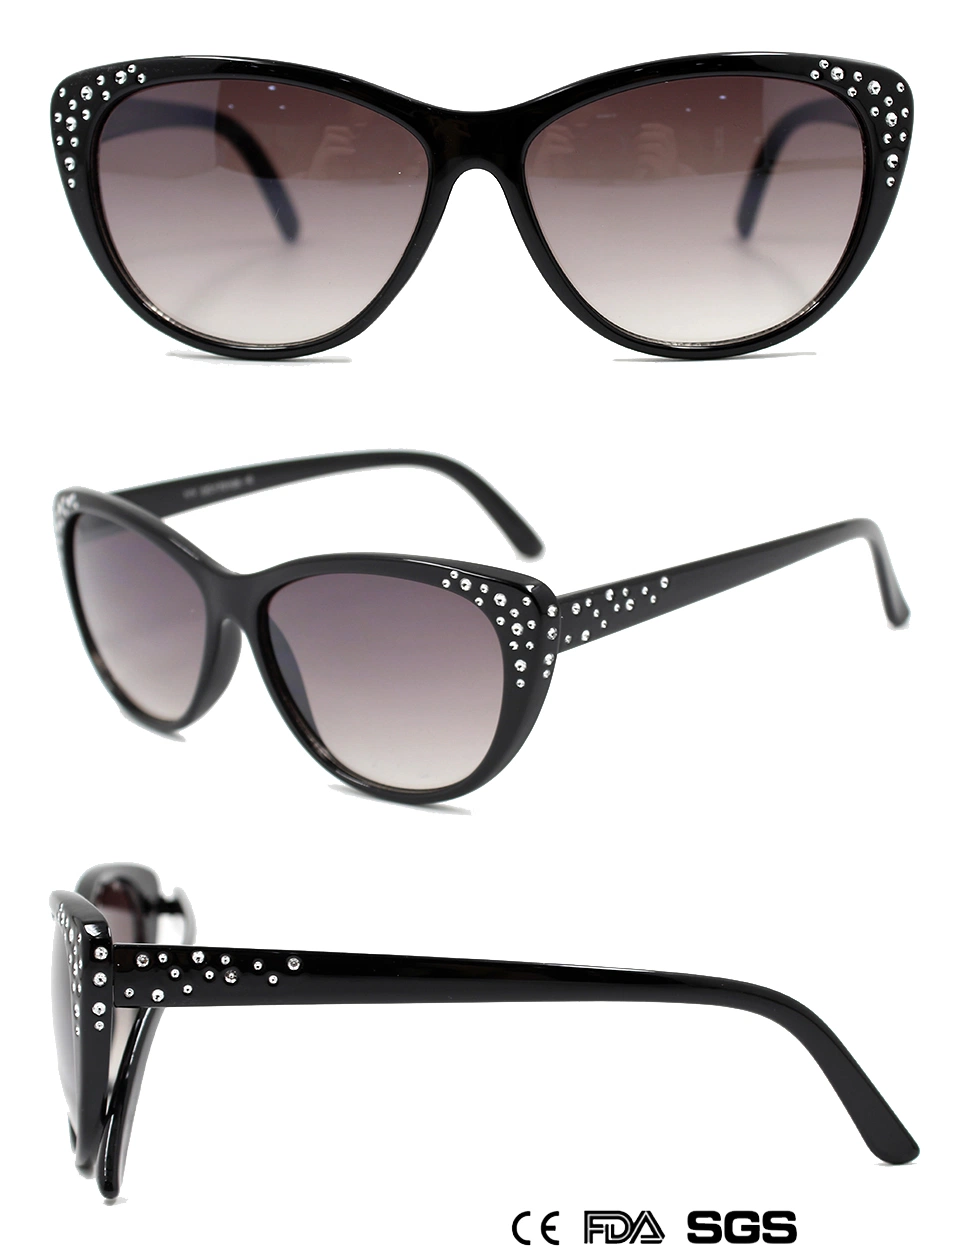 Diamond-Encrusted Lady&prime;s Cat-Eye Sunglasses (M11115)